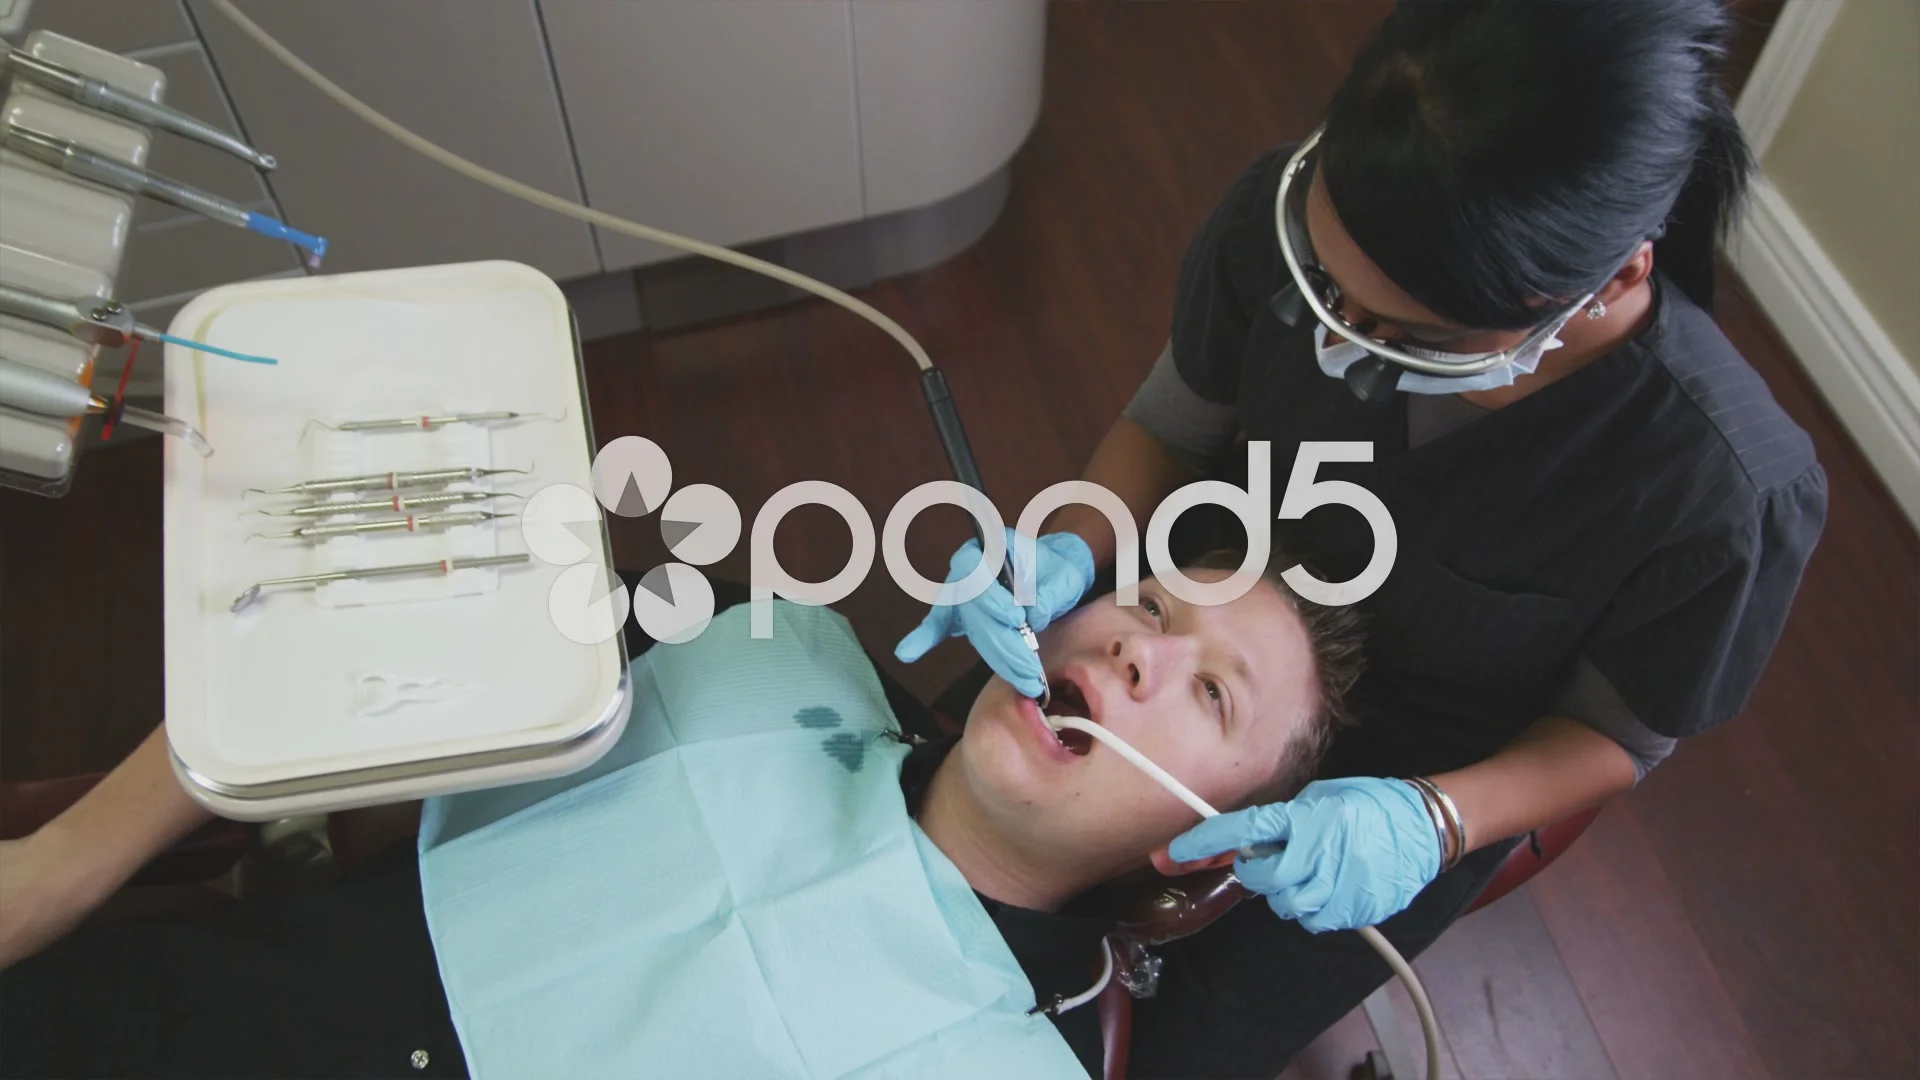 male dental hygienist at work